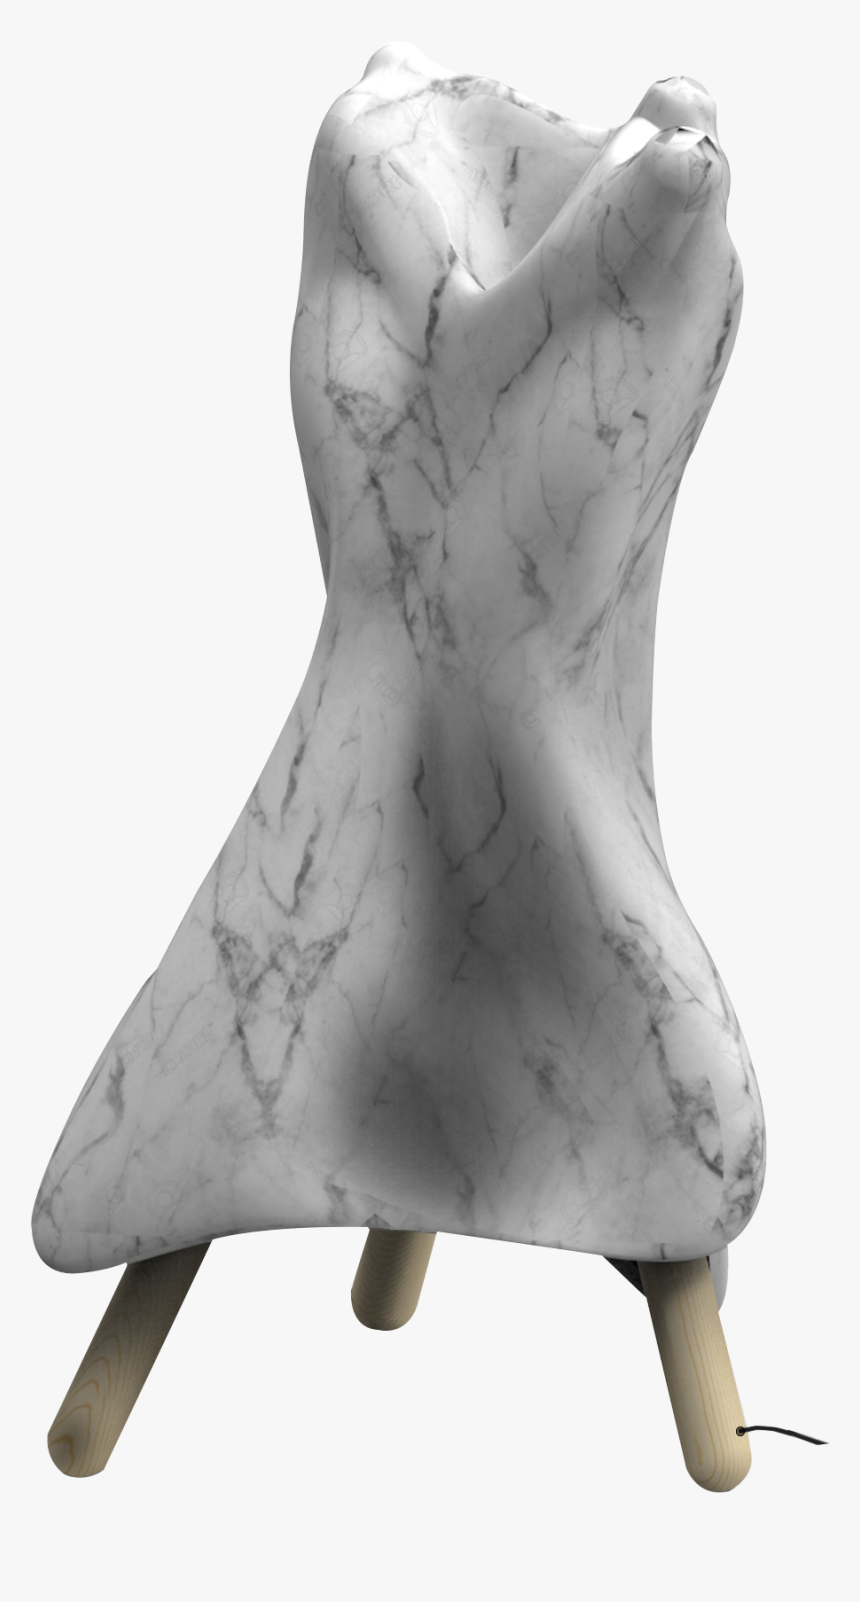 Transparent Modern Sculpture Png - Sculpture, Png Download, Free Download